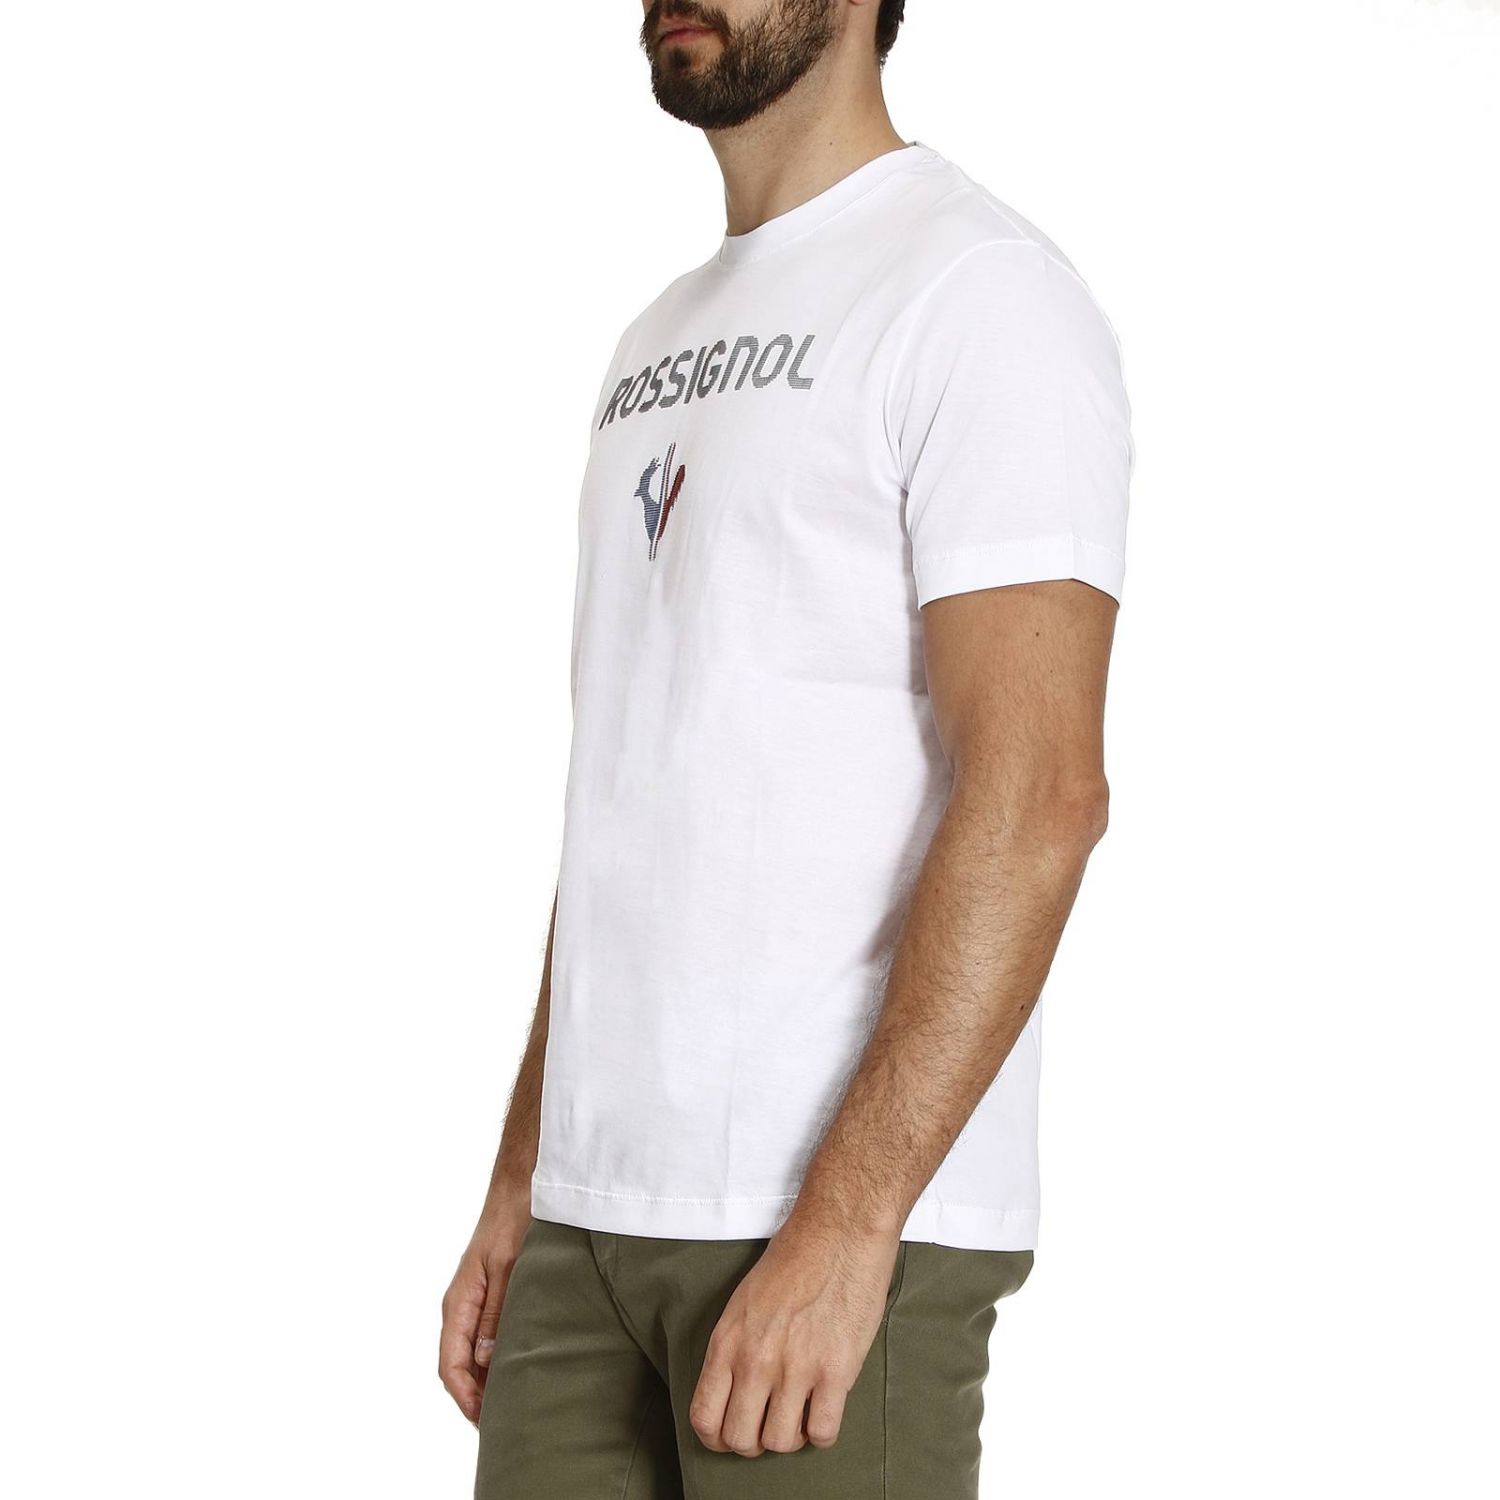 Rossignol Outlet: T-shirt men | T-Shirt Rossignol Men White | T-Shirt ...